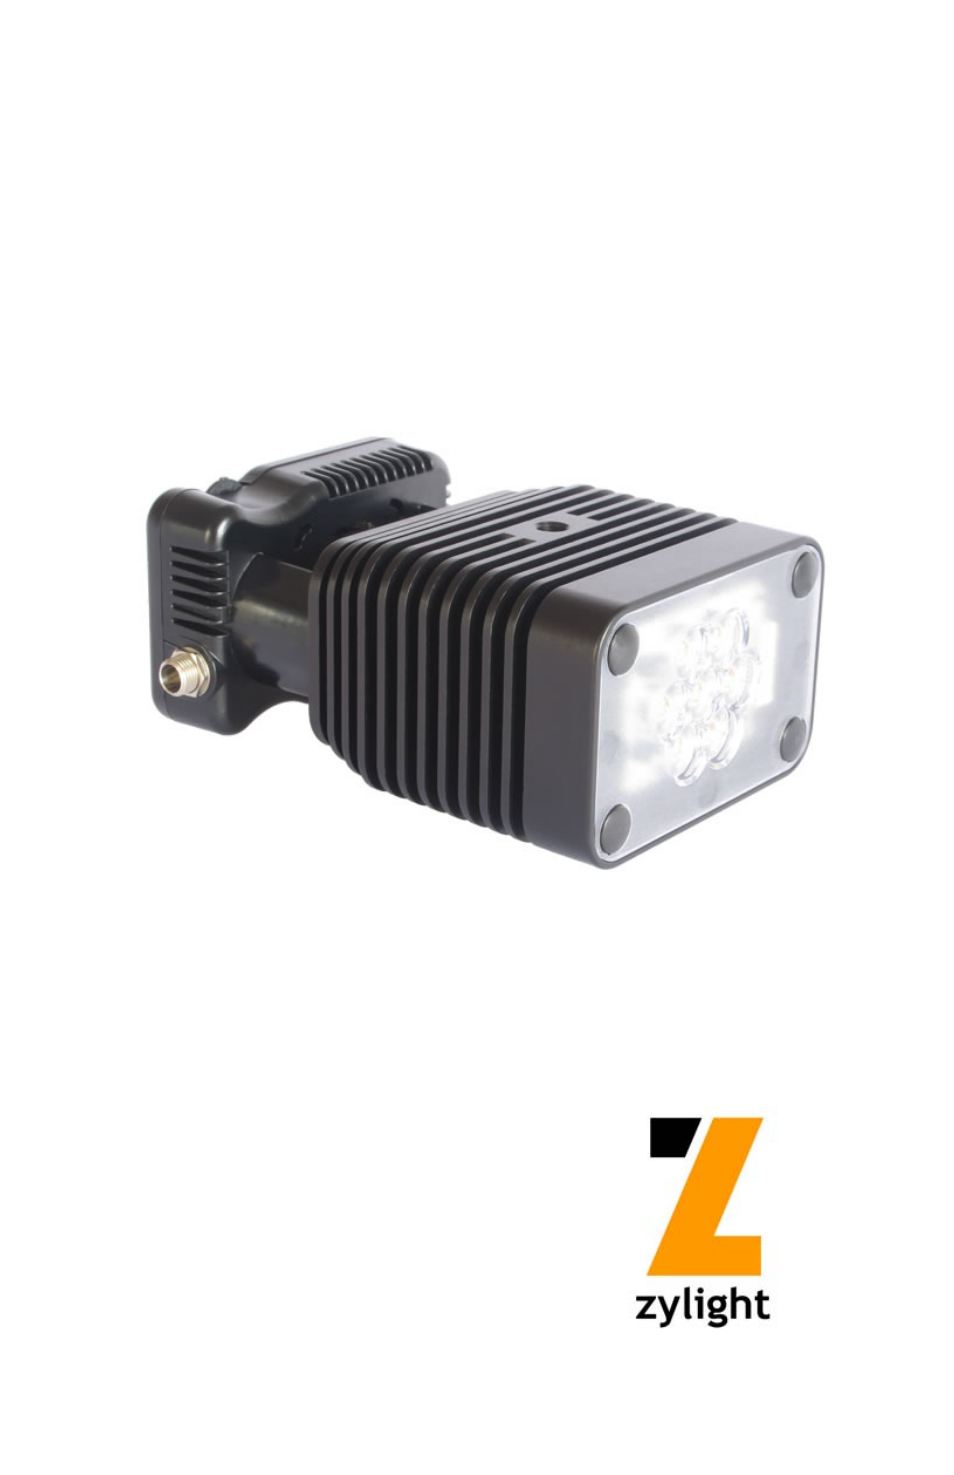 Zylight Z90 LED Light User Manual | 8 pages